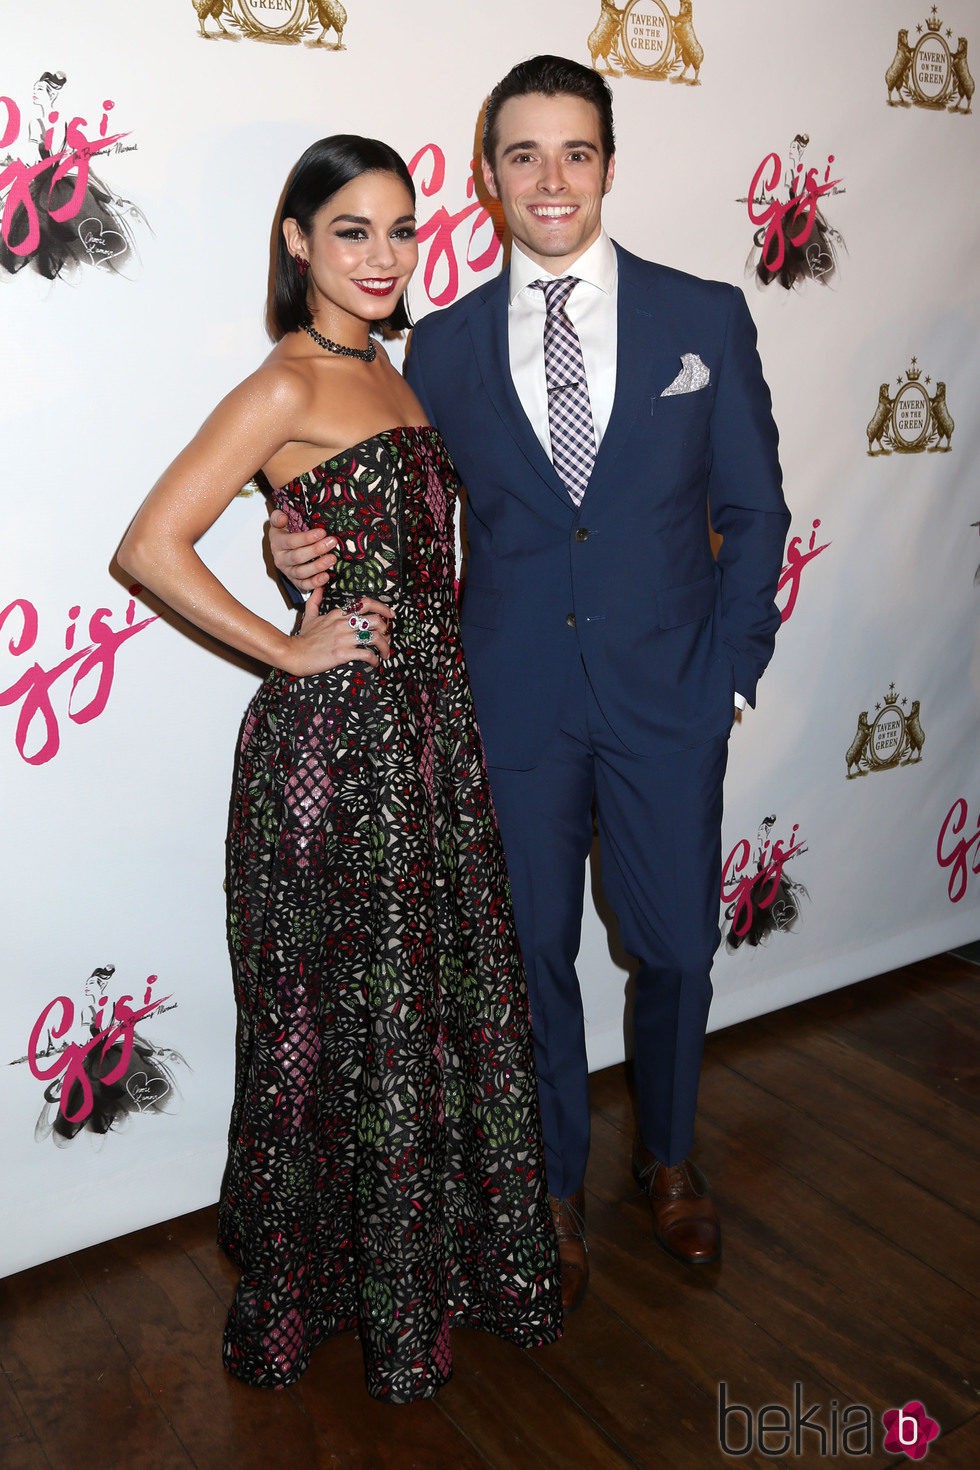 Vanessa Hudgens y Corey Cott en el estreno del musical de Broadway 'Gigi'